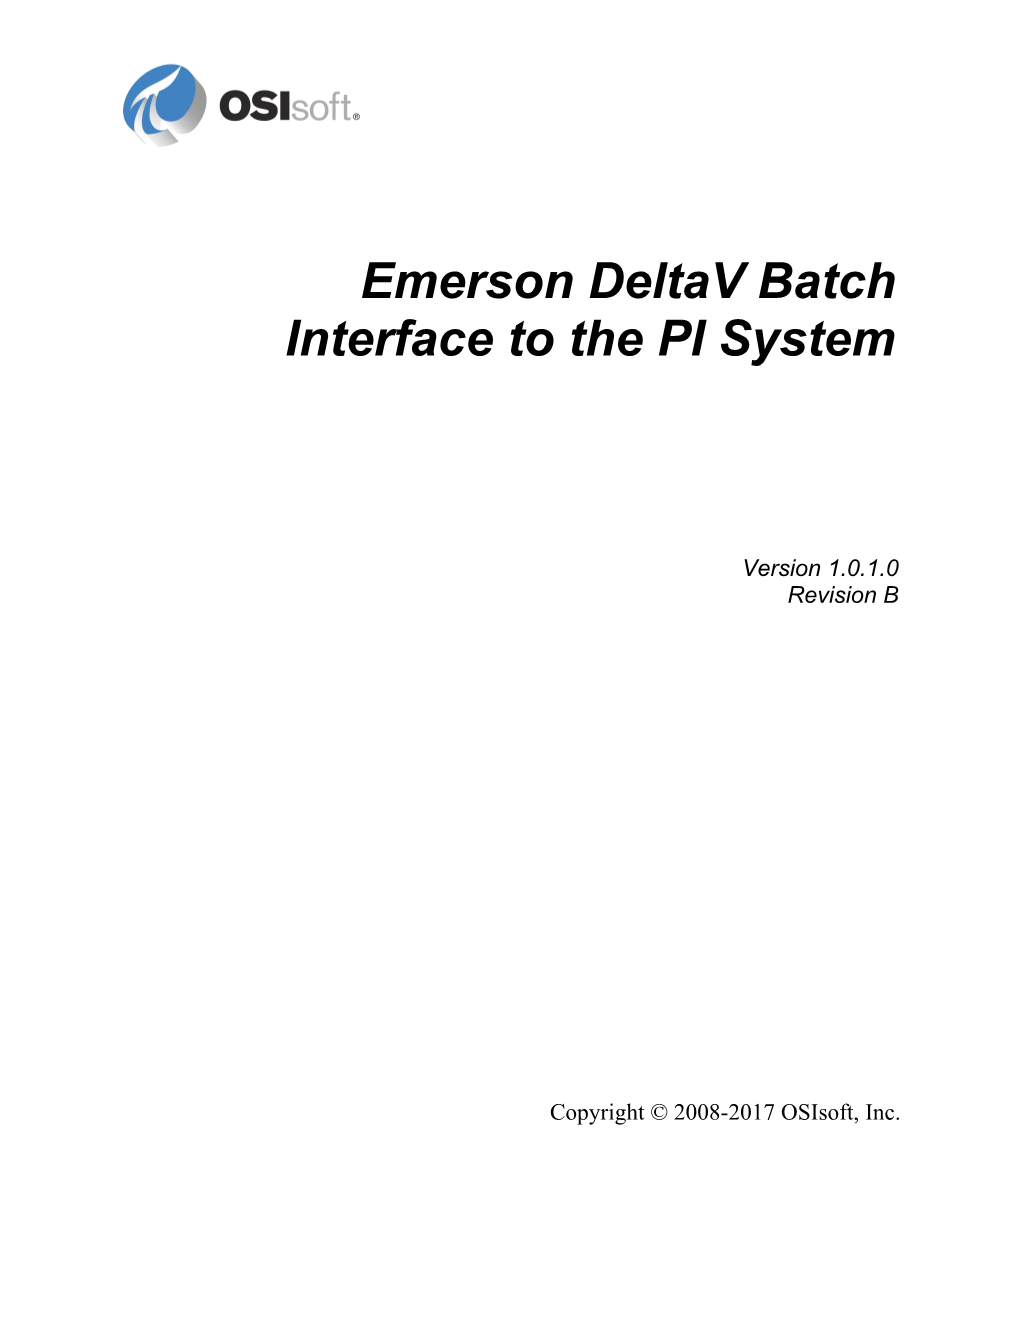 Emerson Deltav Batch Interface To The PI System